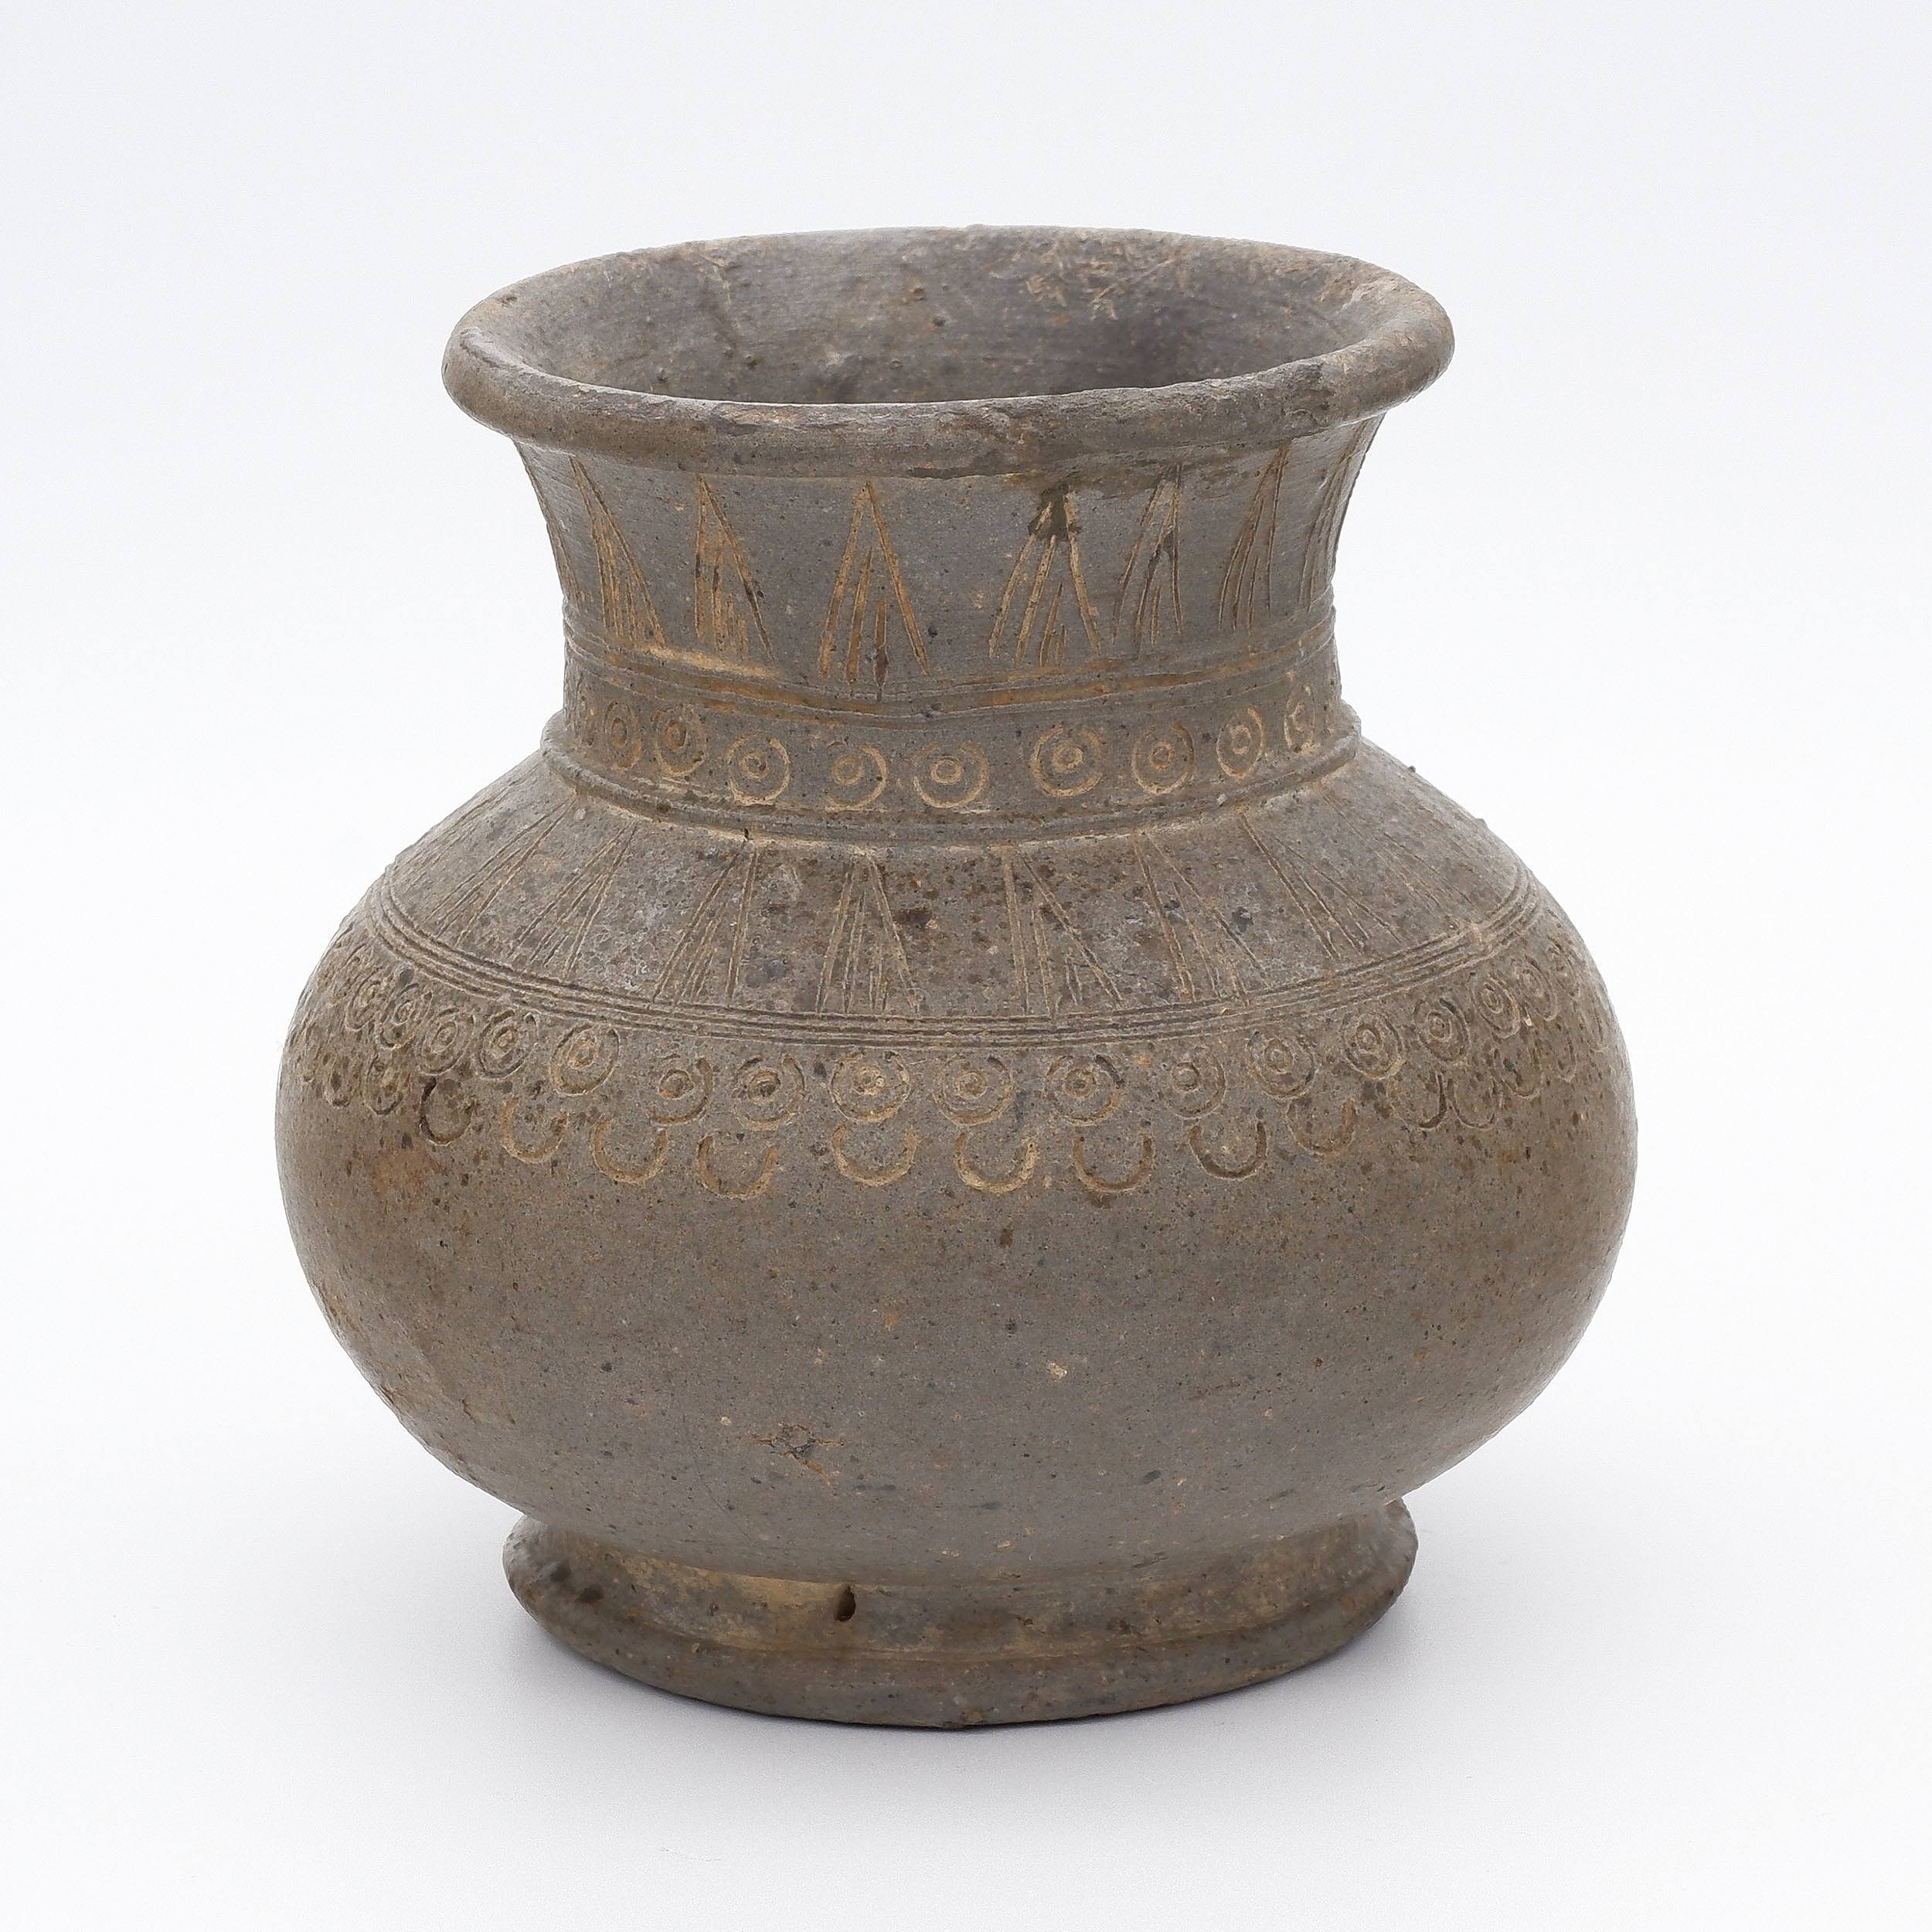 'Archaic Type Greyware Pottery Jar, Probably Silla Dynasty (57 BC-935 AD) Korea'